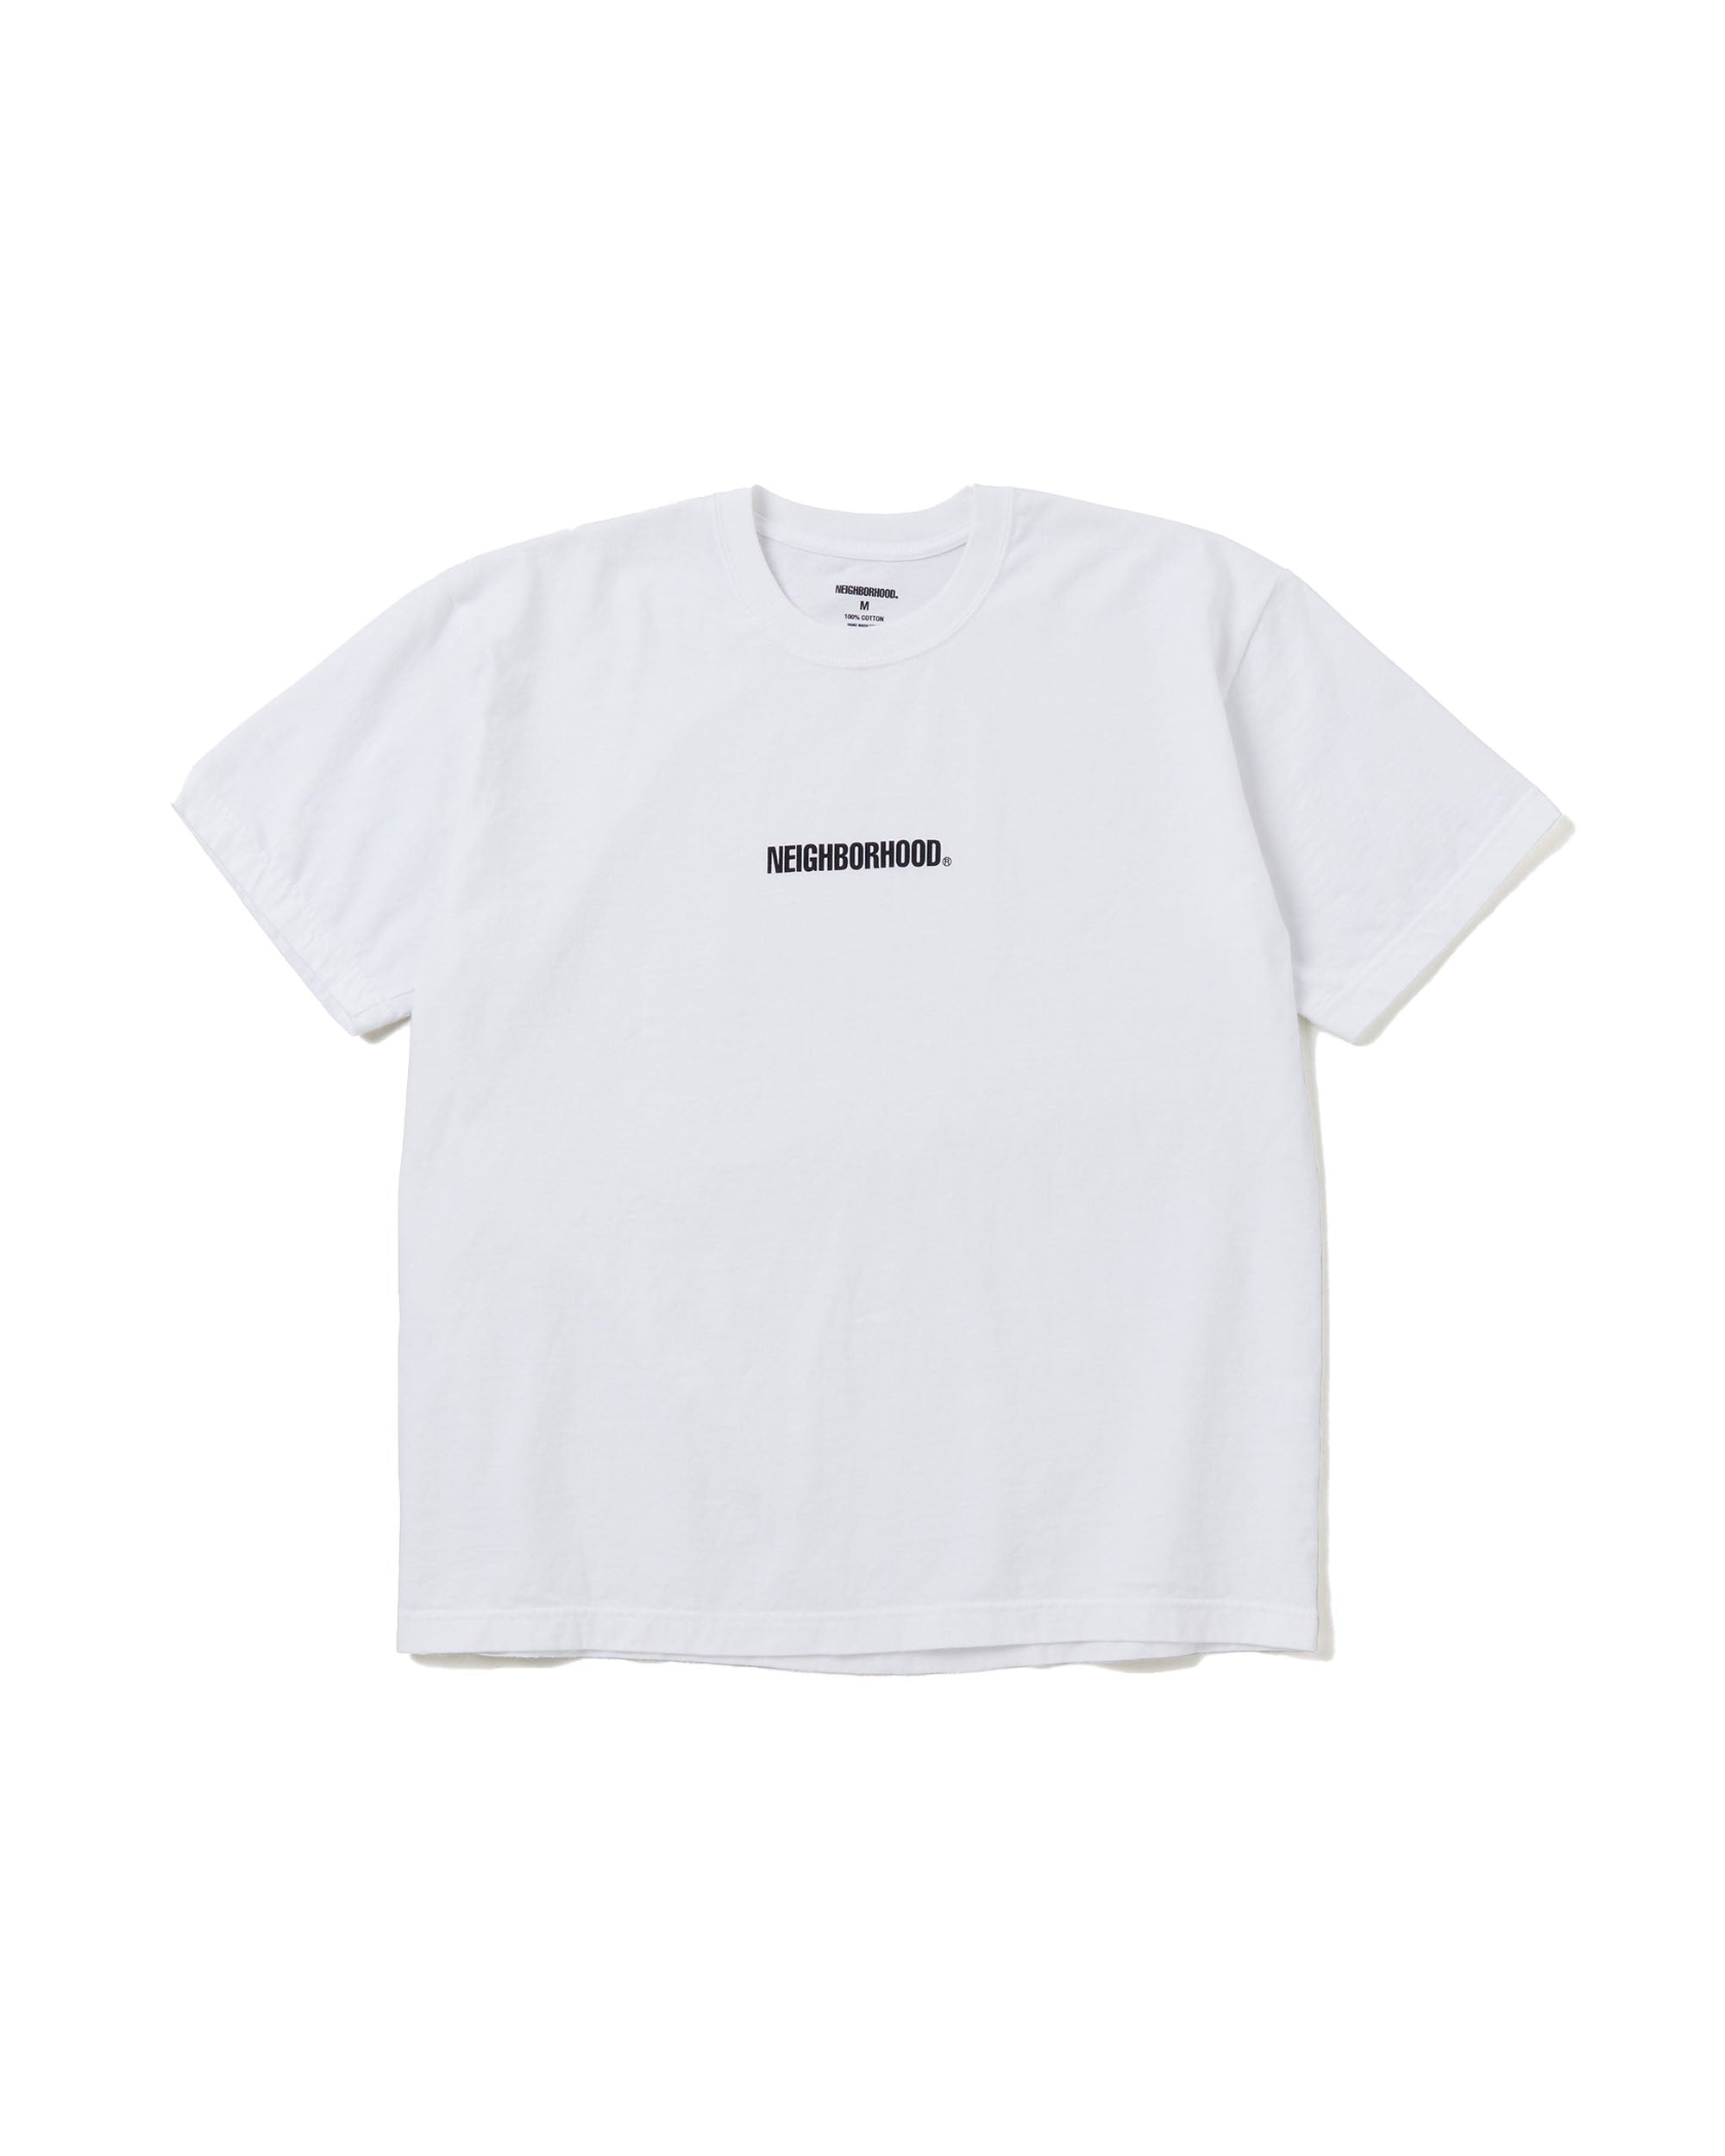 SS-3 T-Shirt - White